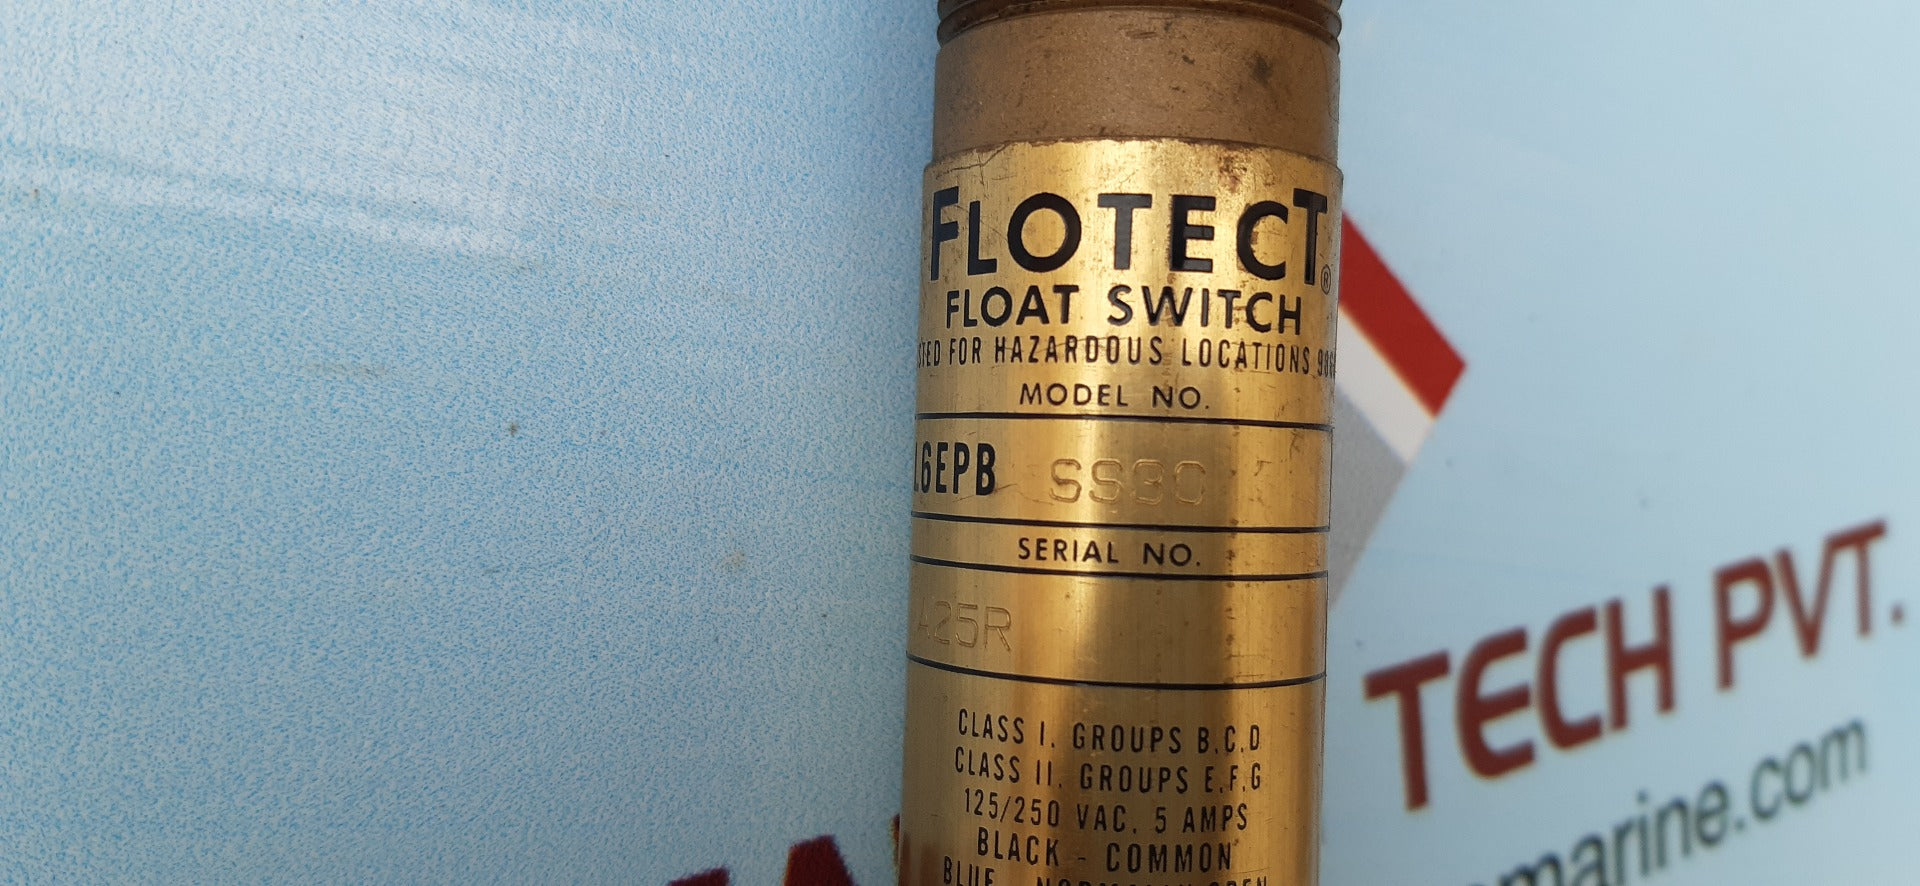 Flotect l6epb ss30 float switch